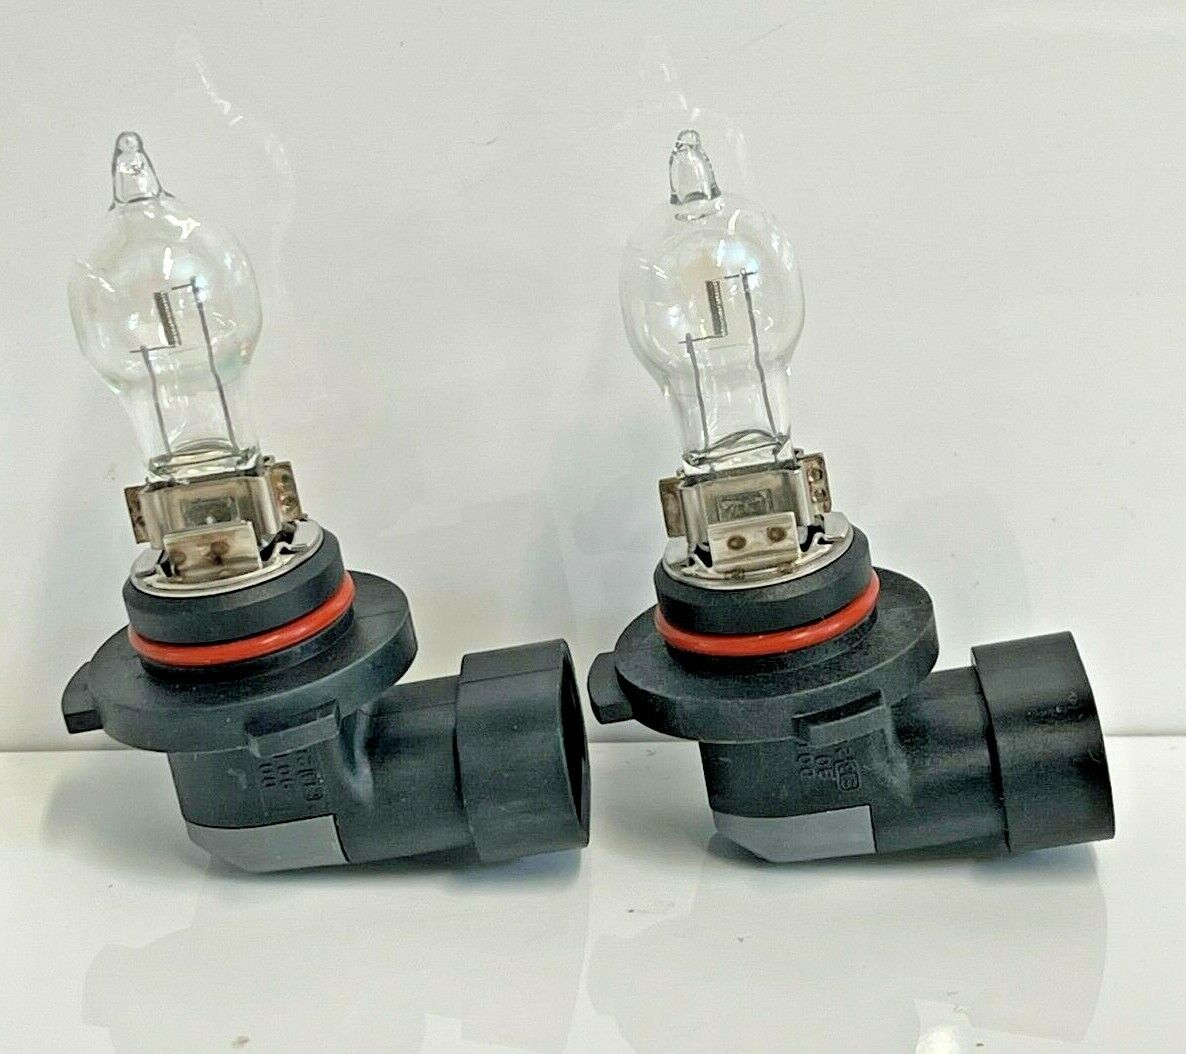 2x-Toshiba HIR1 Bulb Lamps (NOS) WAY Better than Philips/Sylvania (9011)